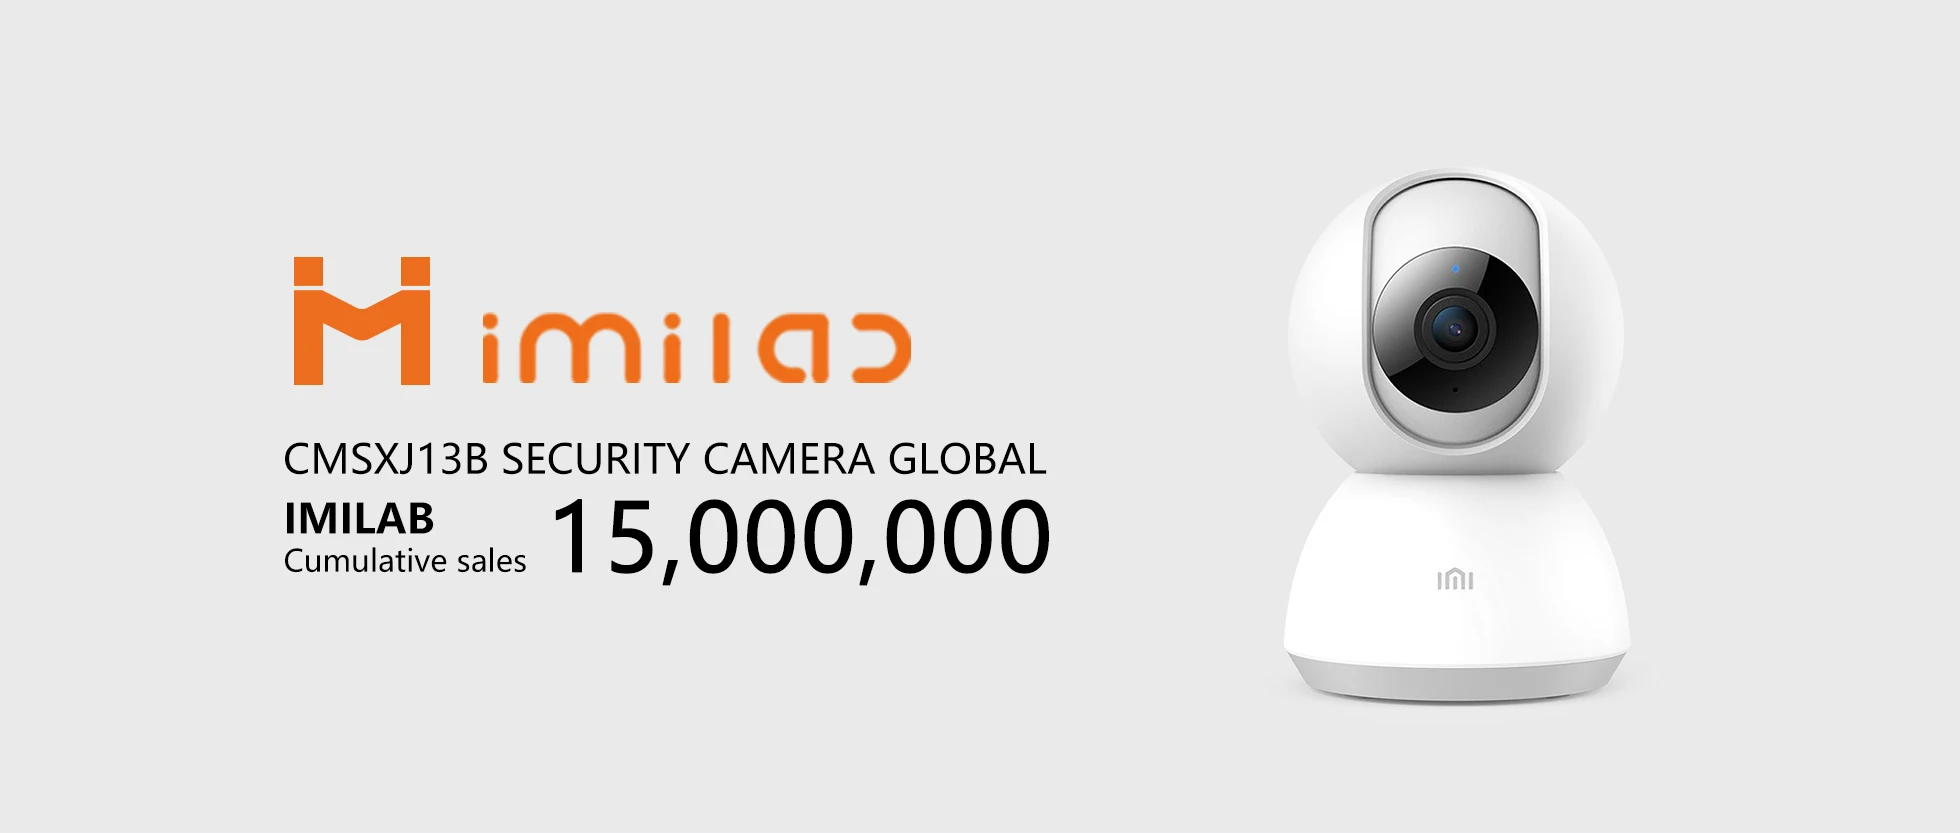 【Global Version】IMILAB Mijia 1080P IP камера 013 Wi-Fi беспроводная домашняя камера безопасности H.265 двухстороннее аудио Радионяня Wifi камера